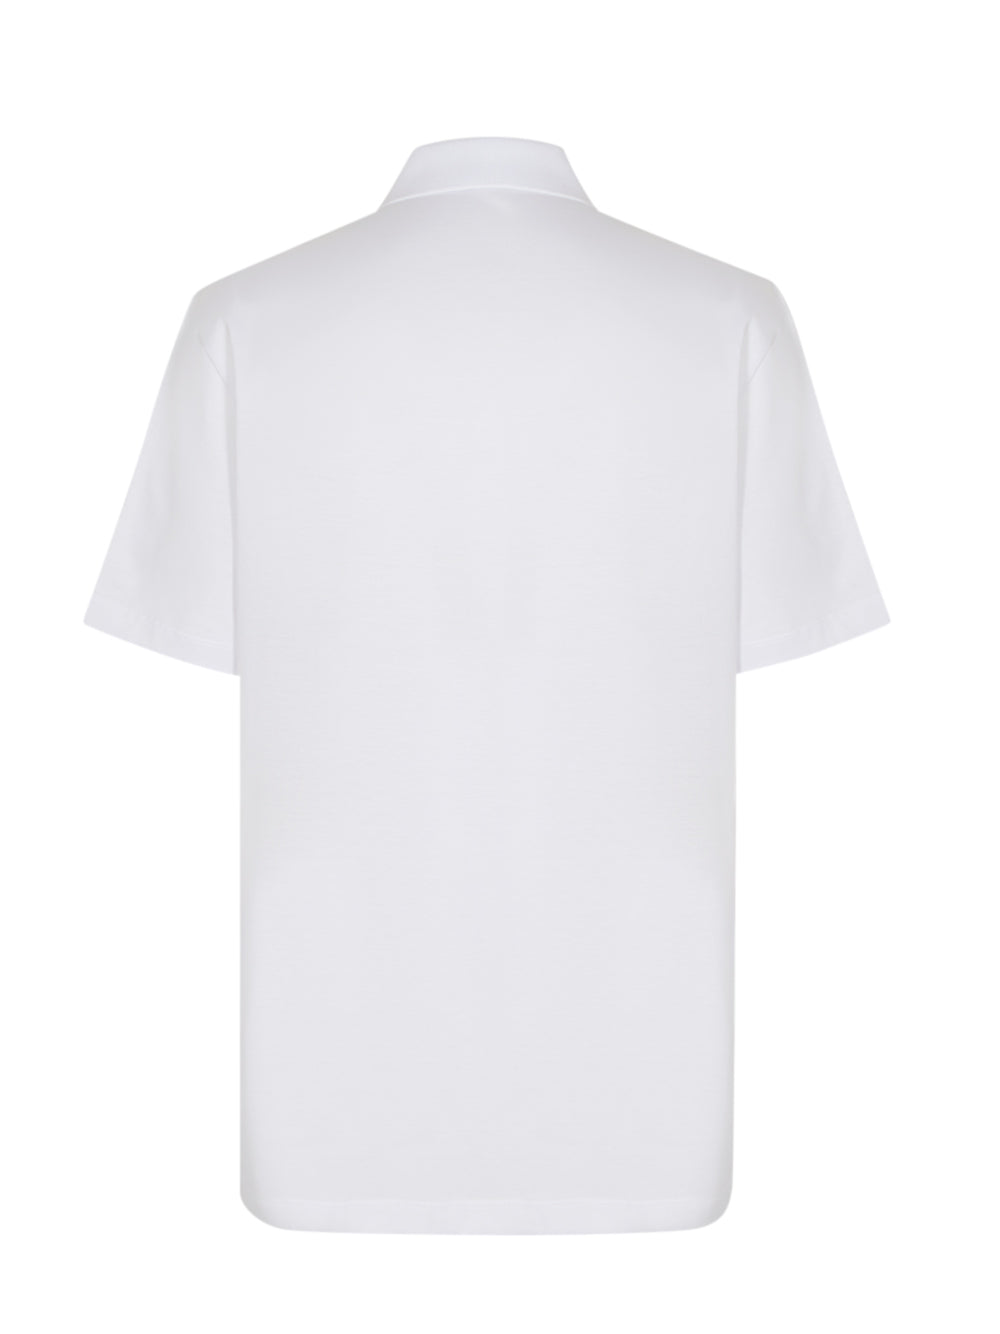 Pima Cotton Silk Short Sleeve (White)